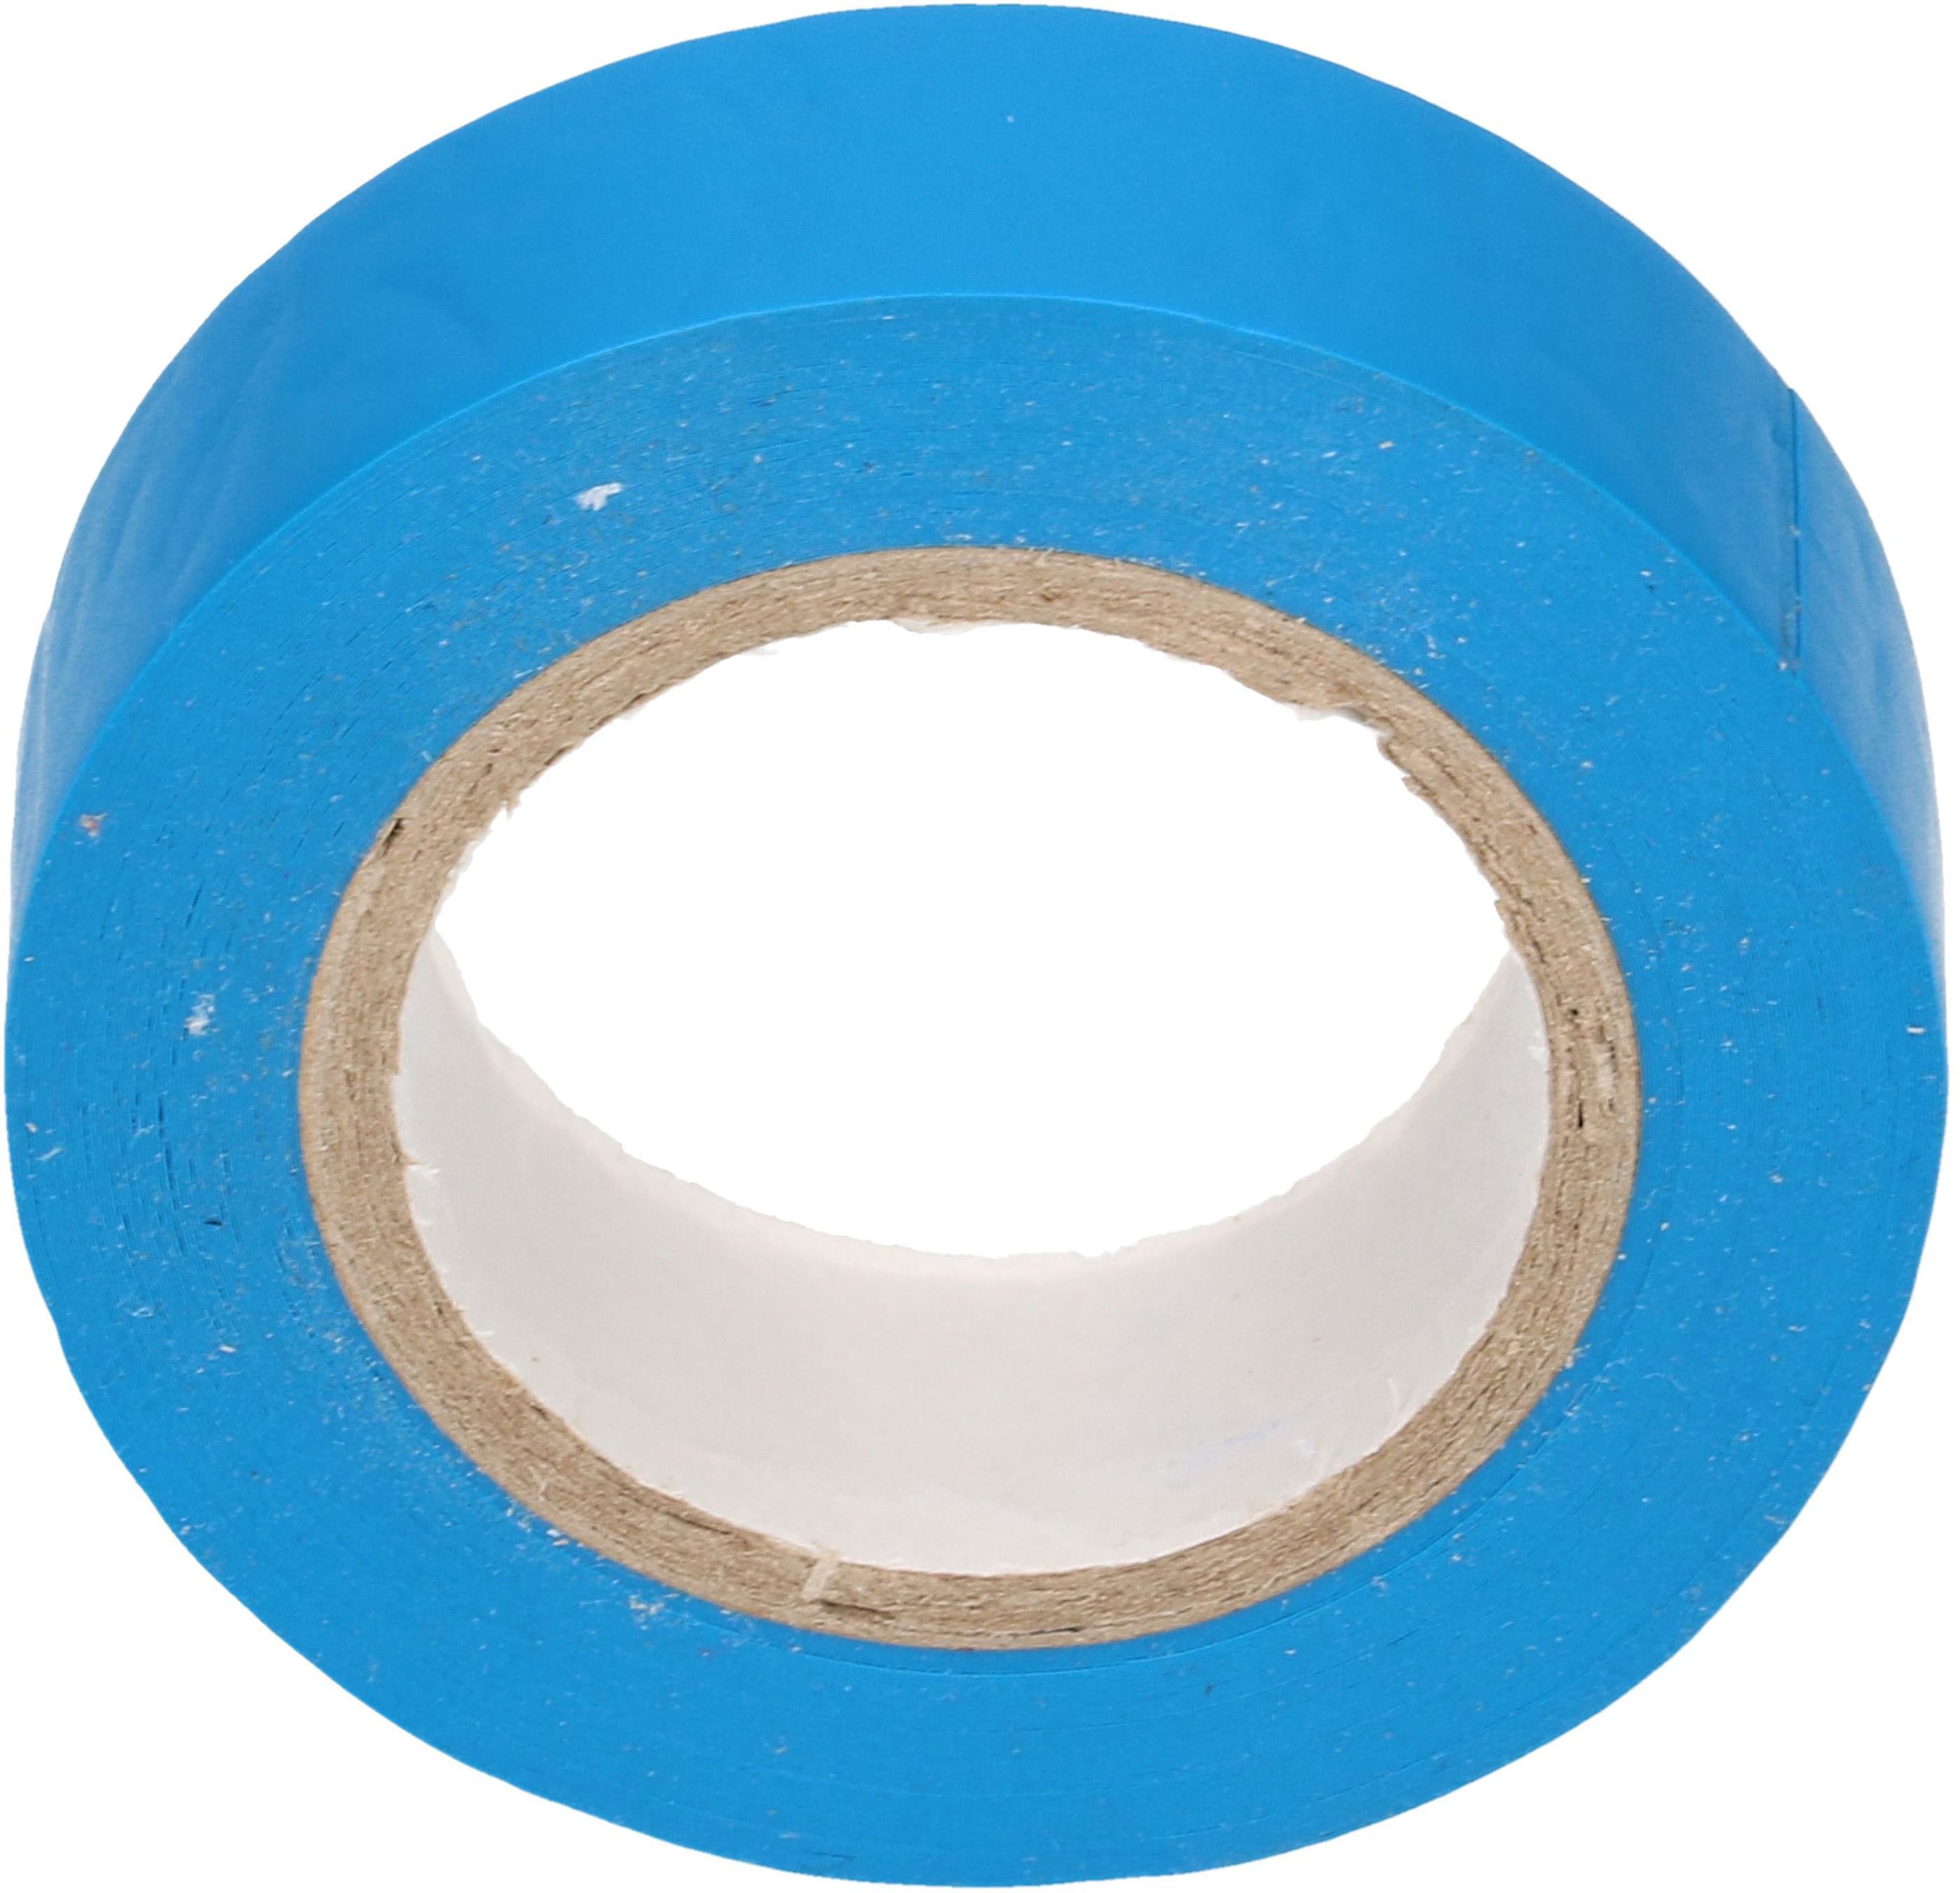 Isolierband Universal DIN EN 60454 Farbe blau 15mmx10m